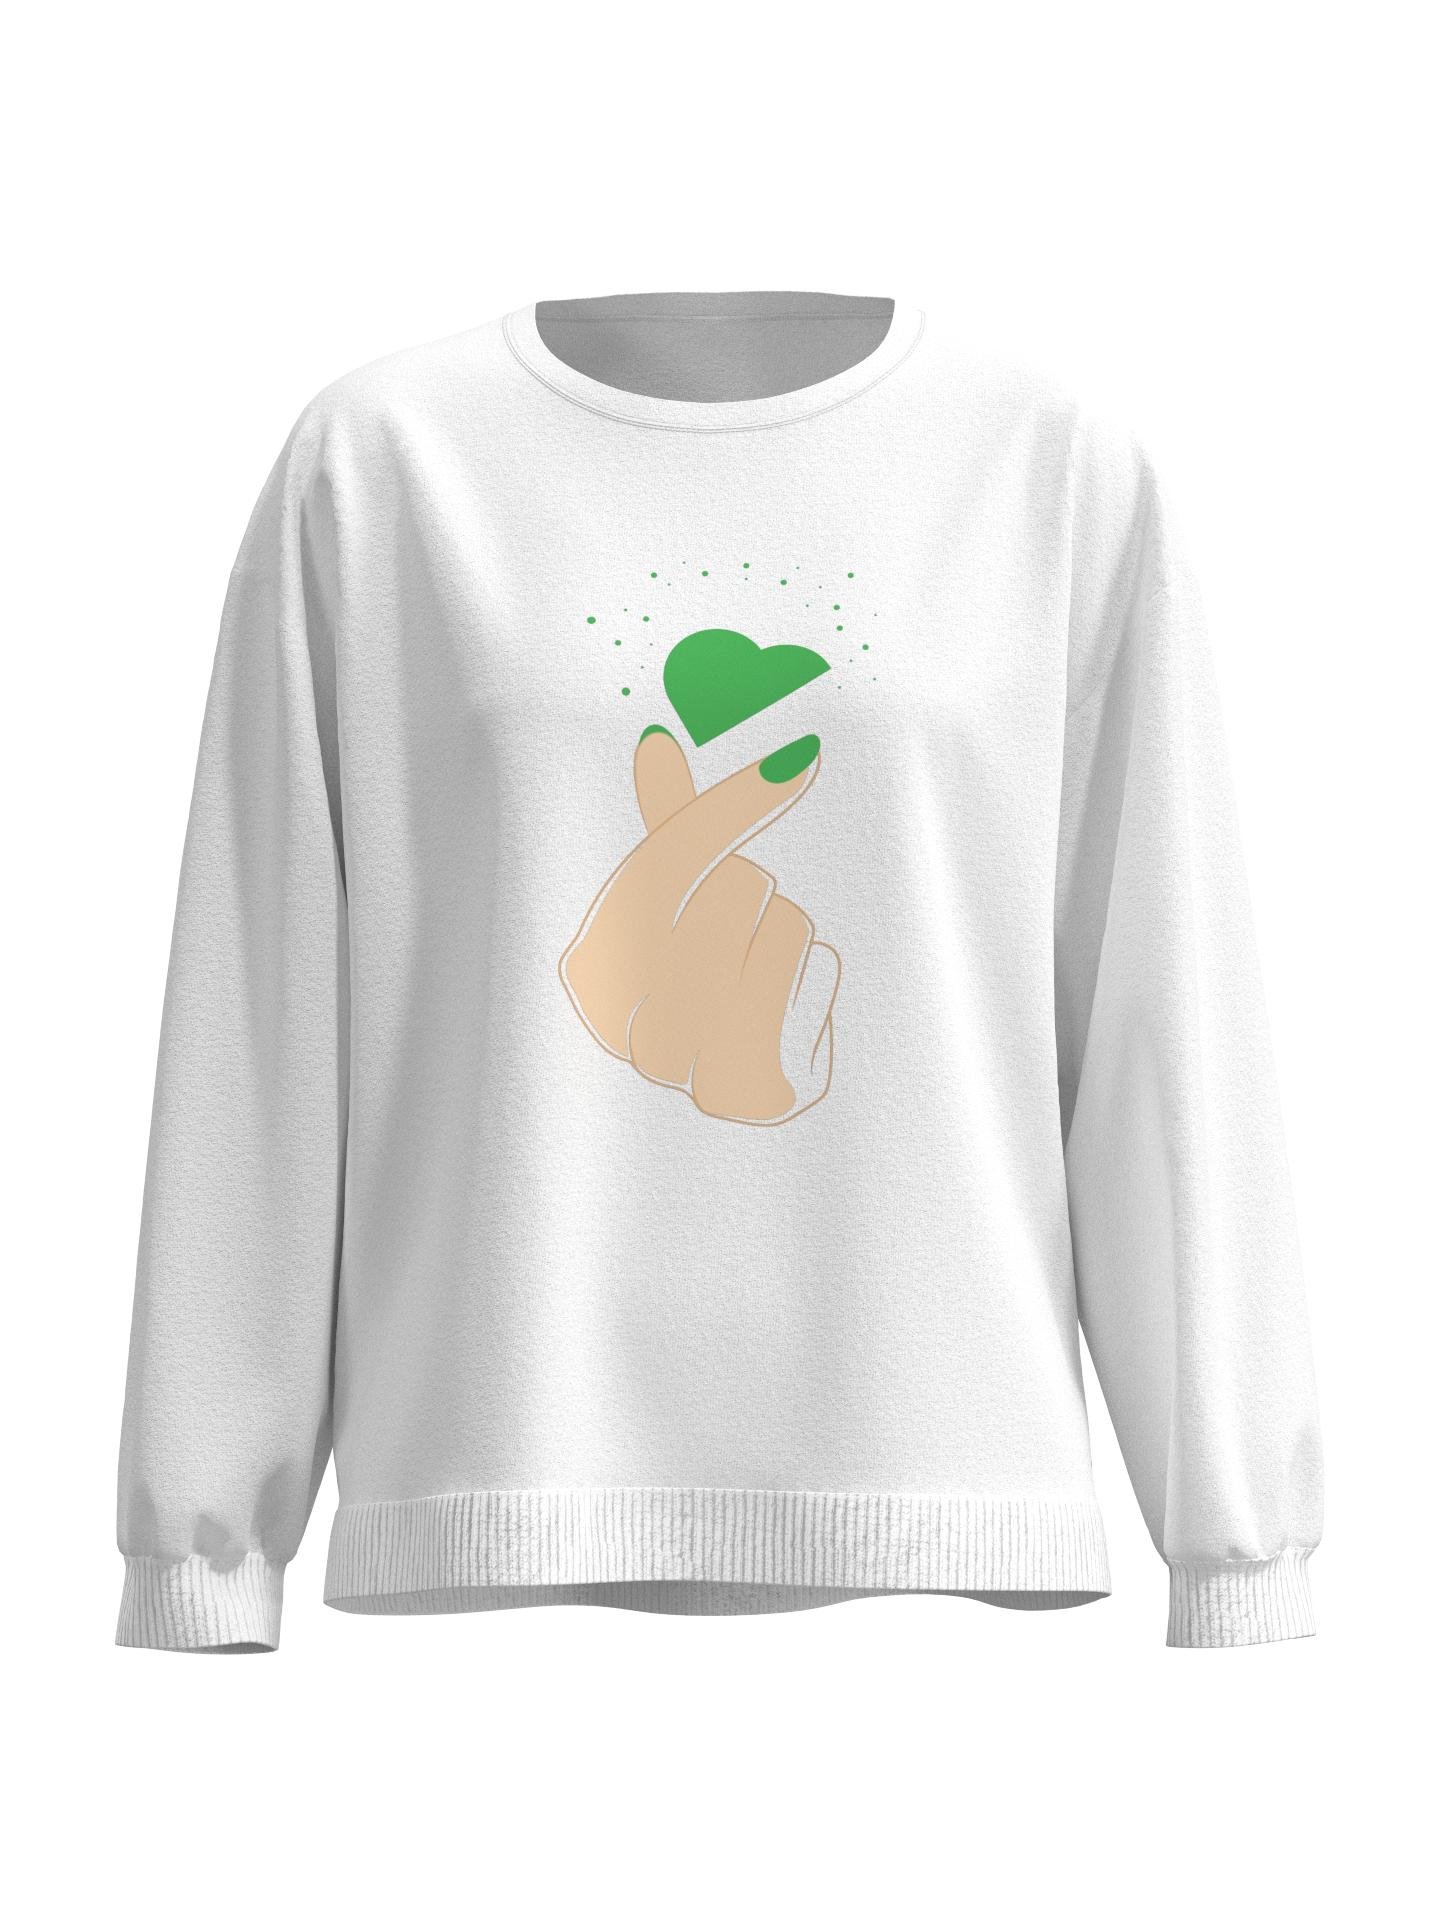 Snap heart sweatshirt by PRINTEMPS